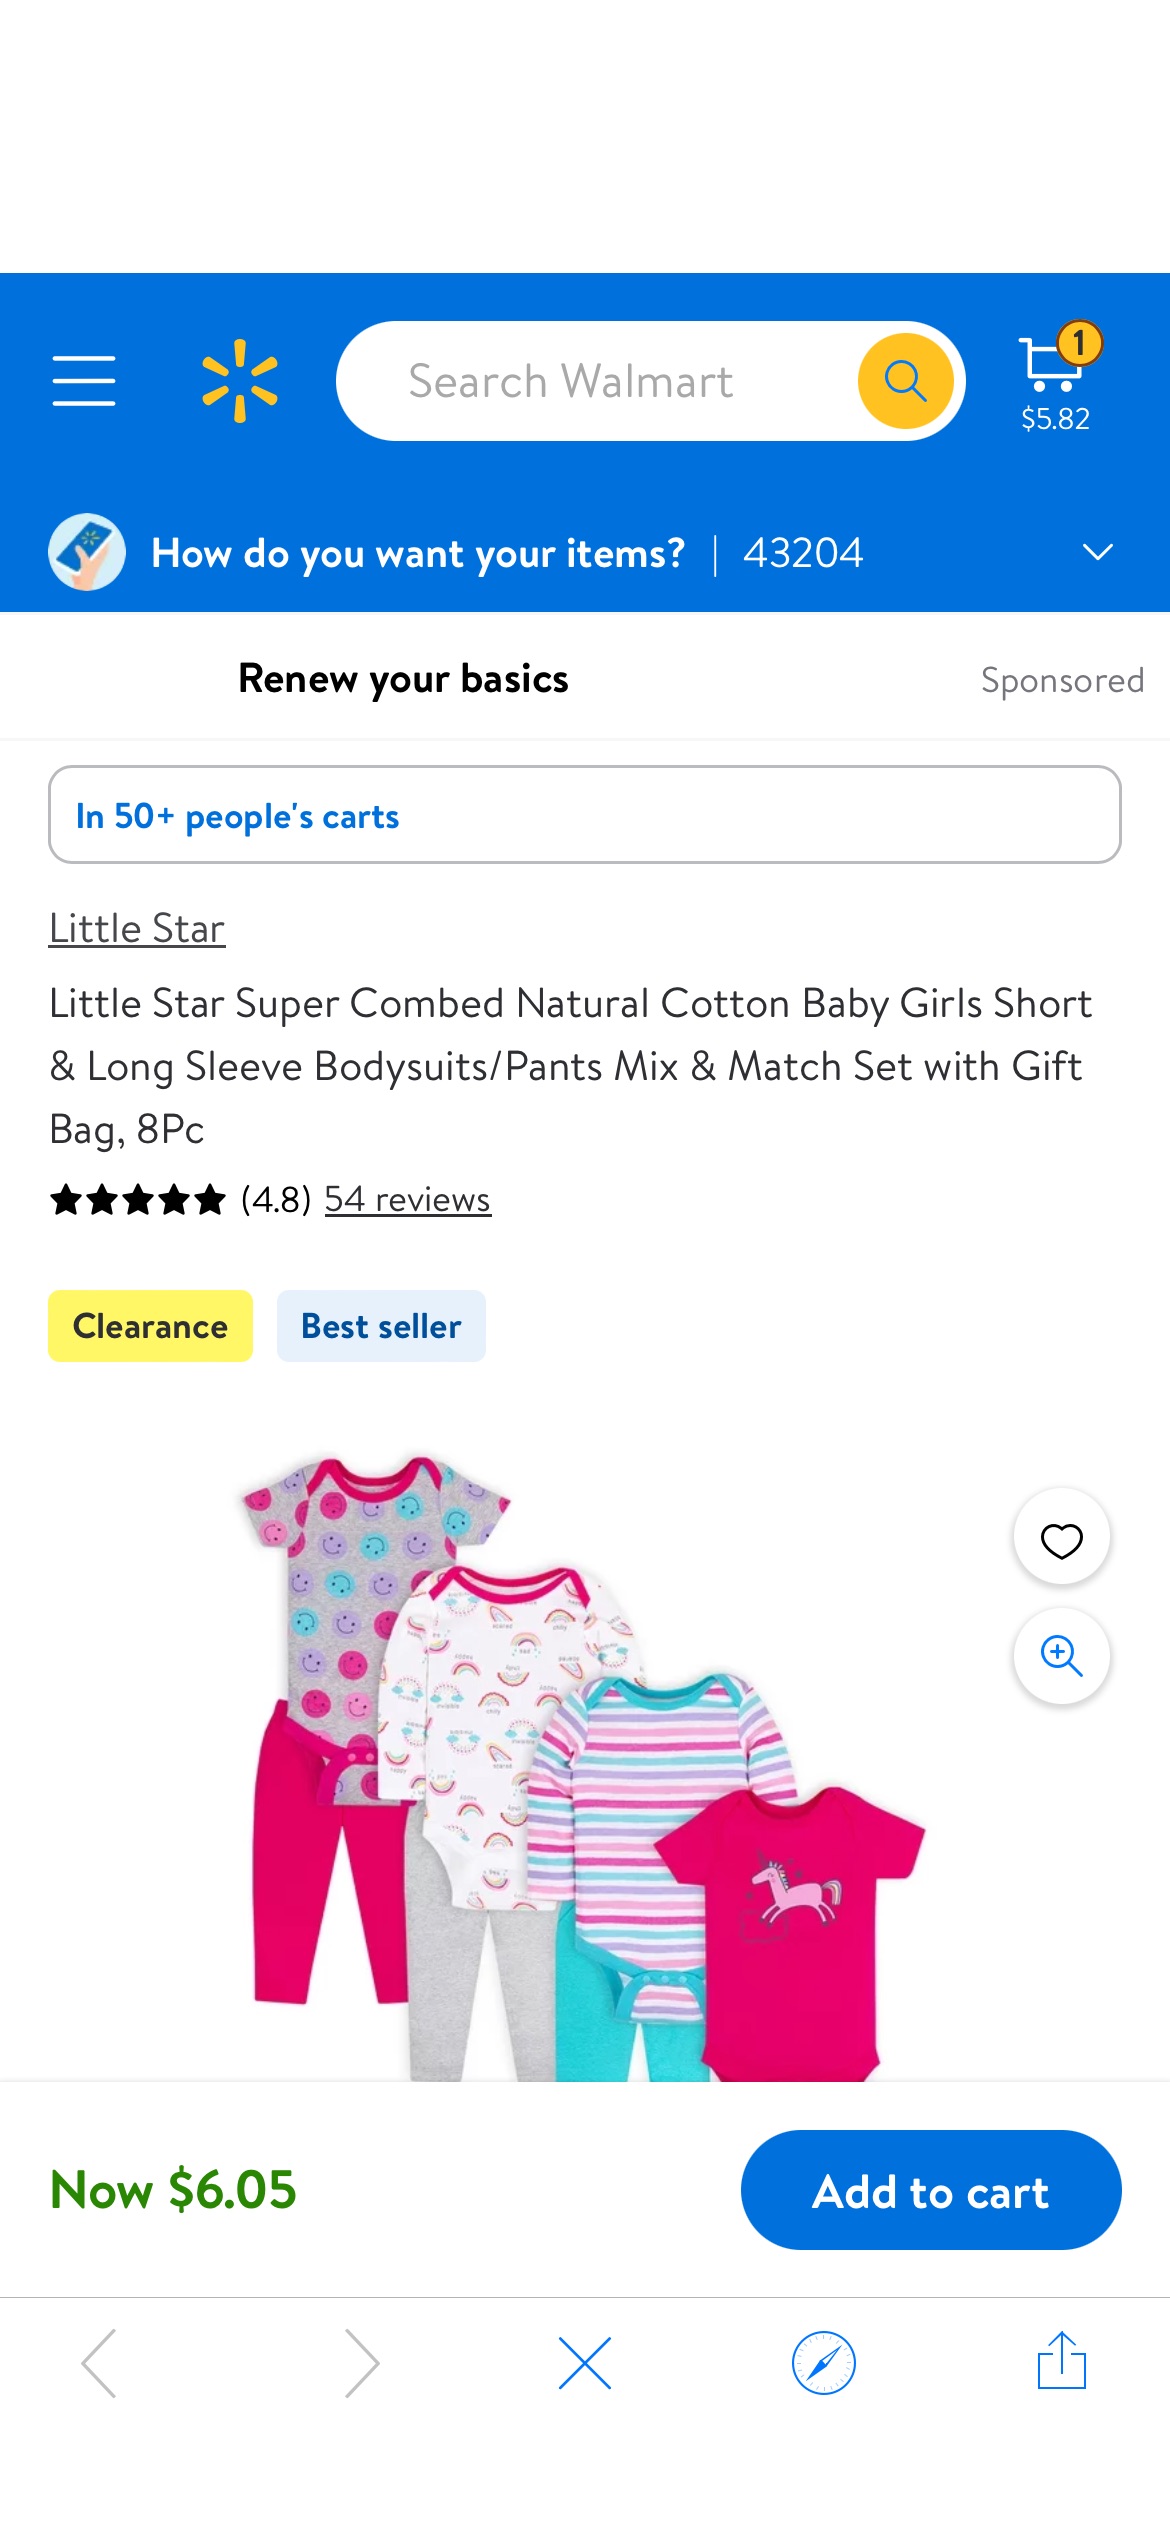 Little Star Super Combed Natural Cotton Baby Girls Short & Long Sleeve Bodysuits/Pants Mix & Match Set with Gift Bag, 8Pc - Walmart.com八件套 婴幼儿套装